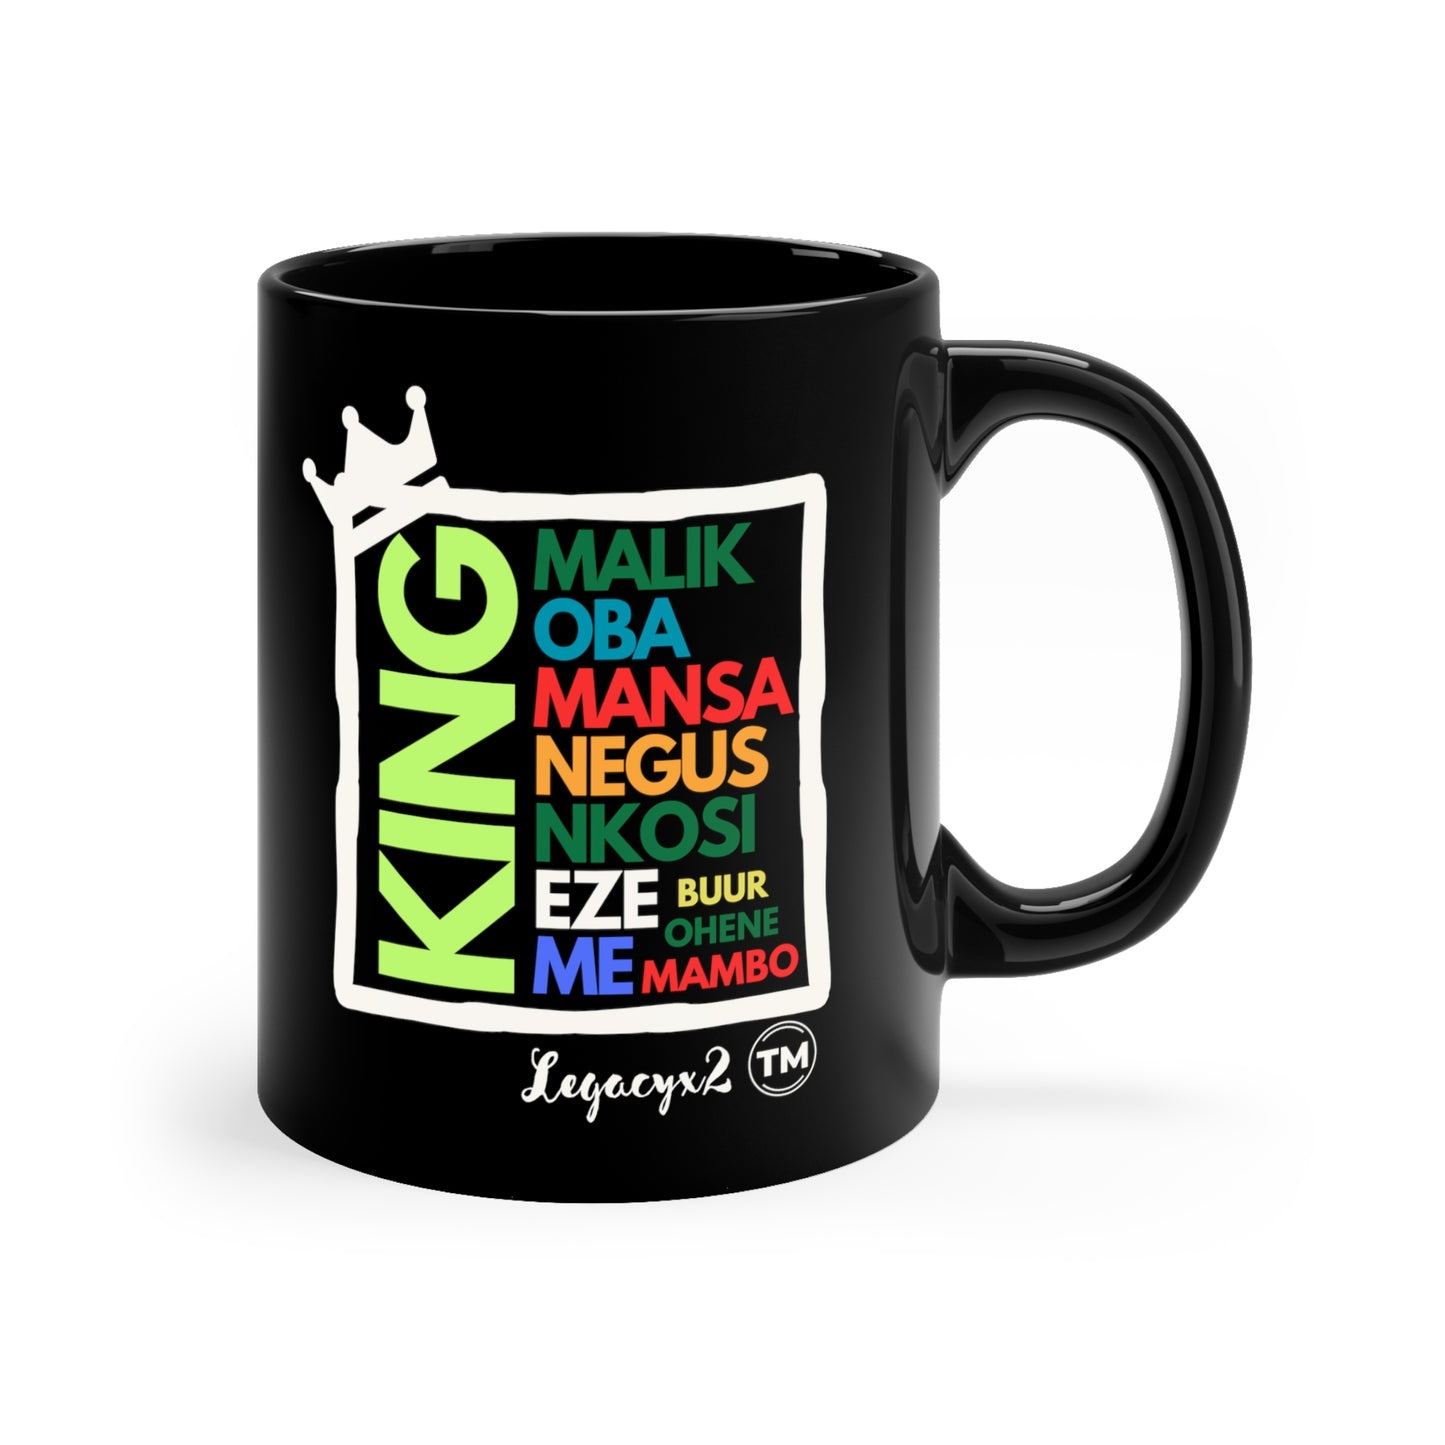 He is Our King Coffee Mug, 11oz